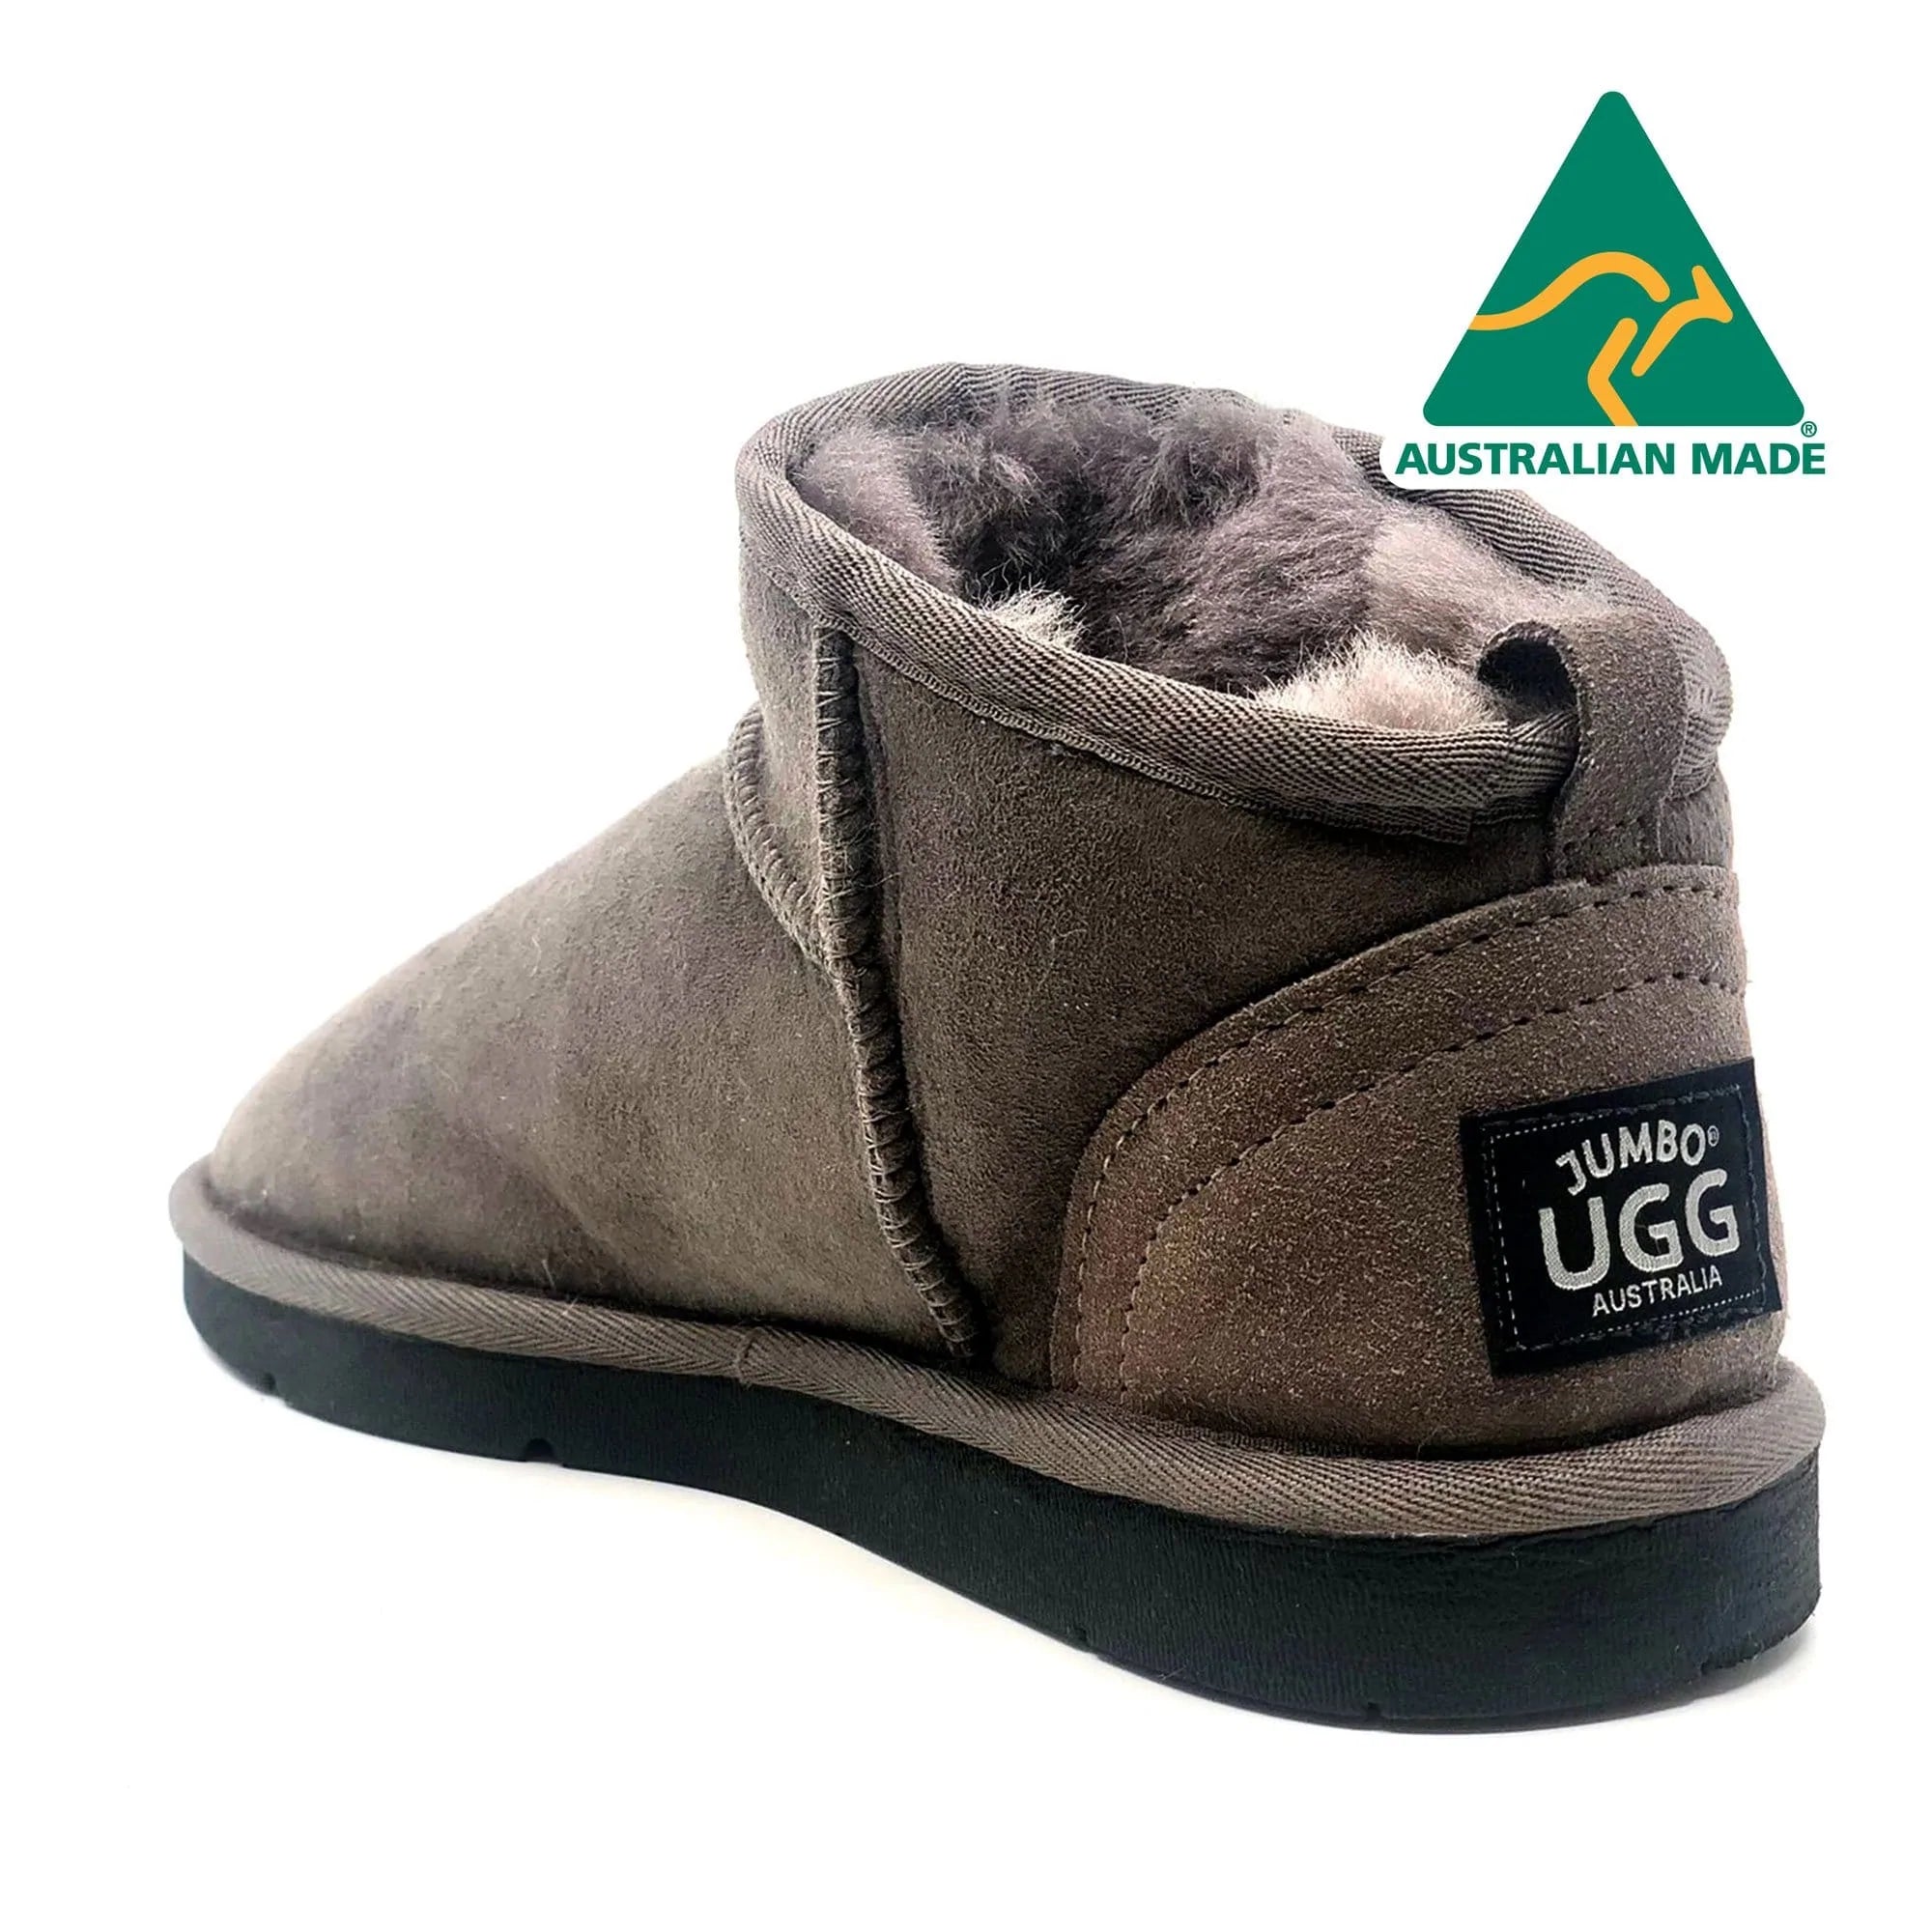 Ugg Boots - UGG Premium Mini Pote Boots - Original UGG Australia Classic